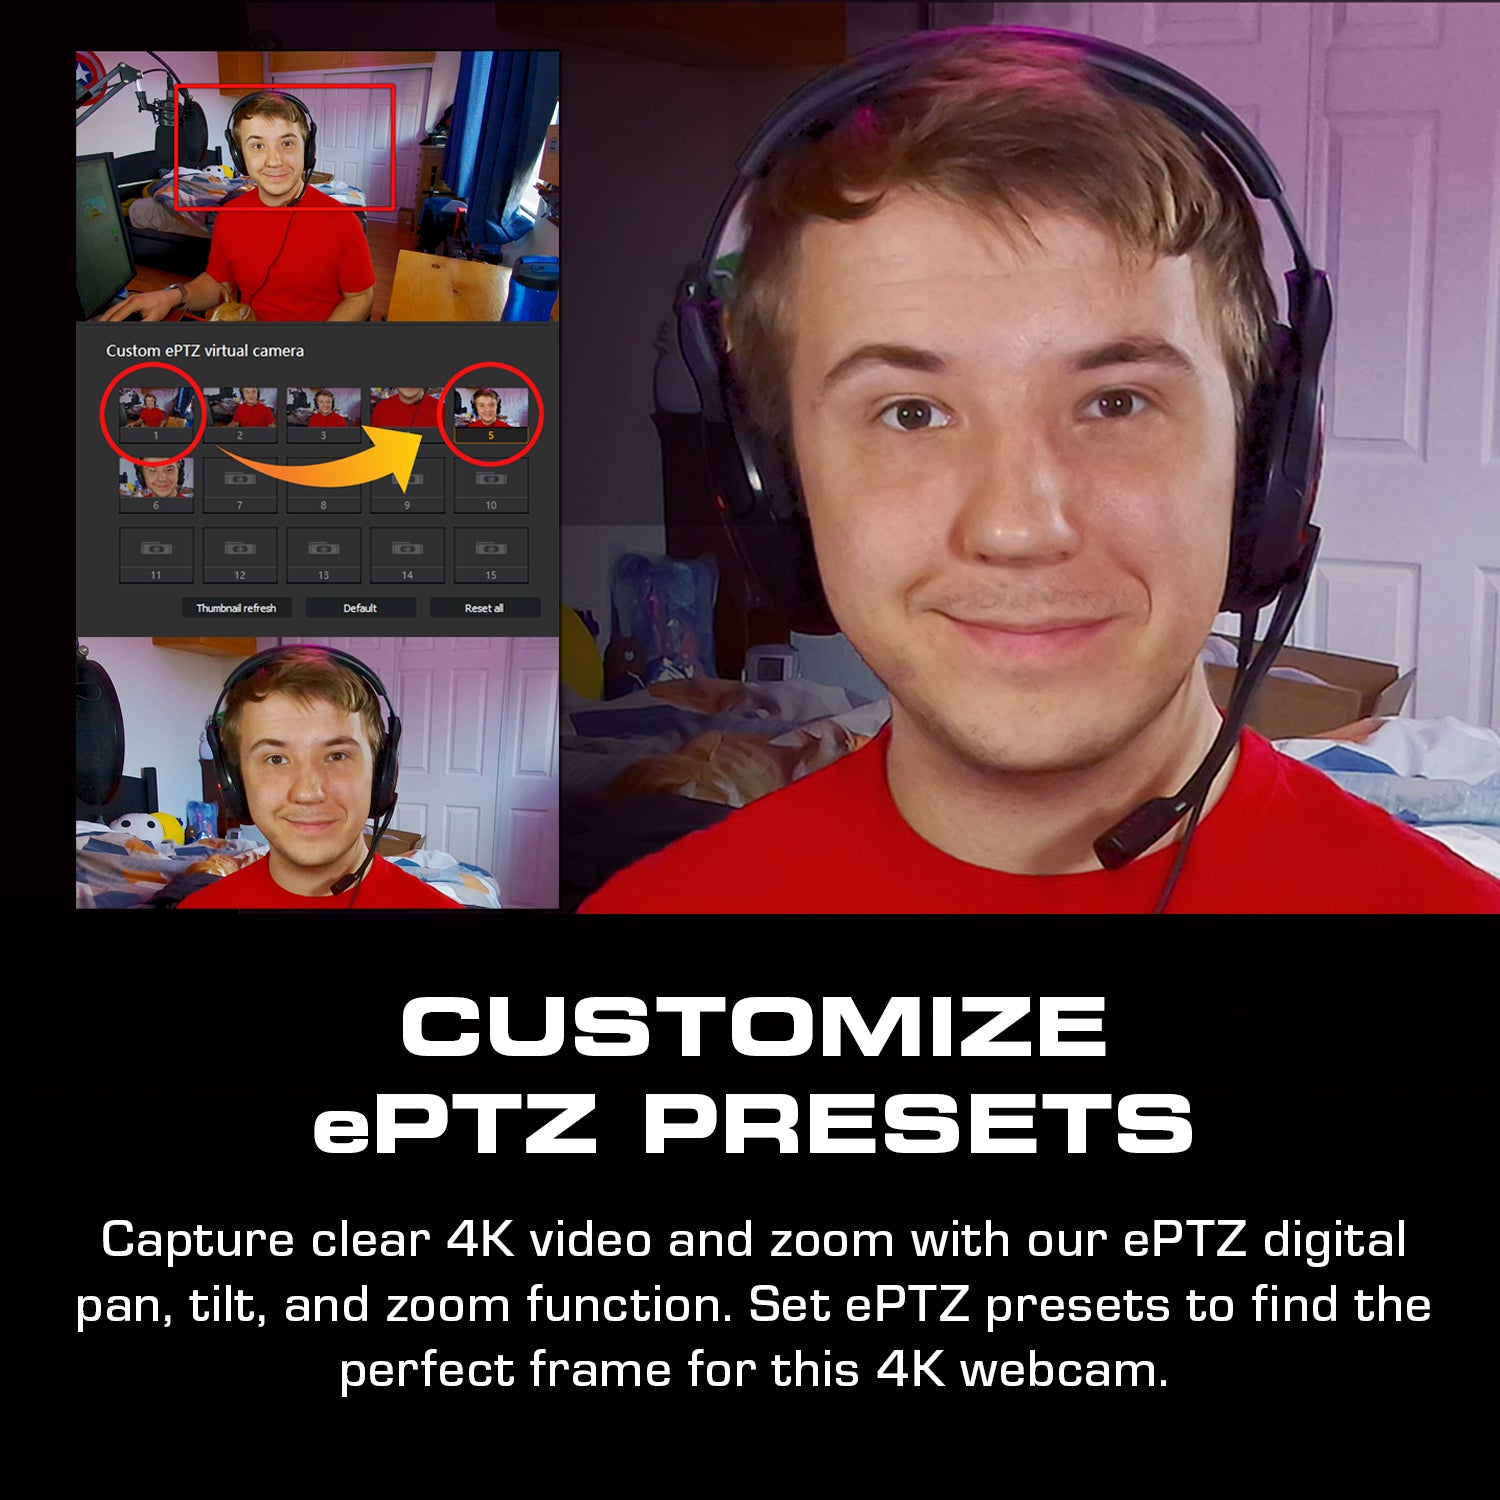 4K Webcam with customize ePTZ presets